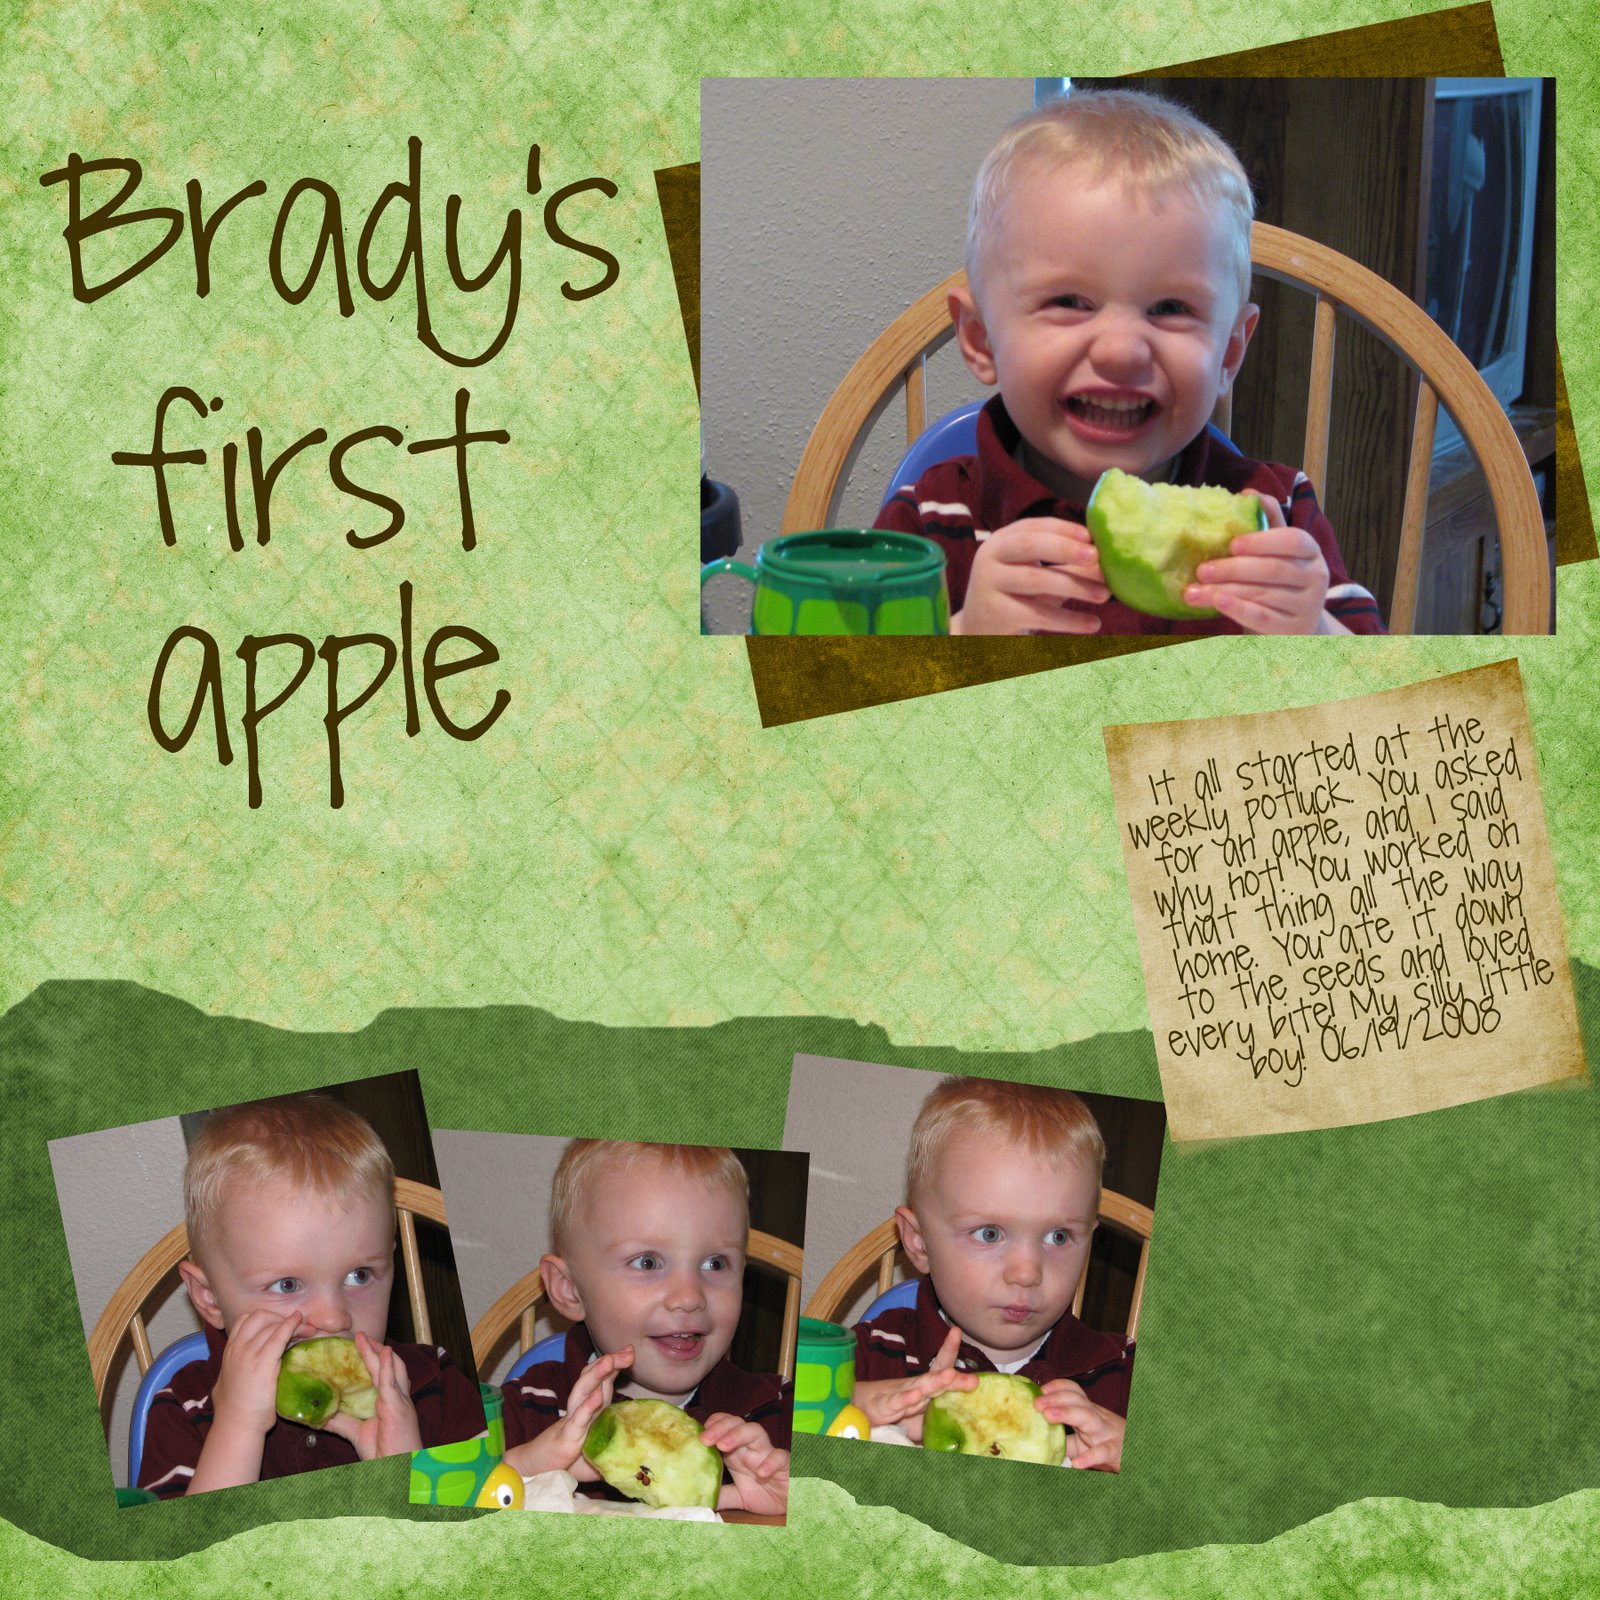 [Brady's+first+apple_edited-1.jpg]